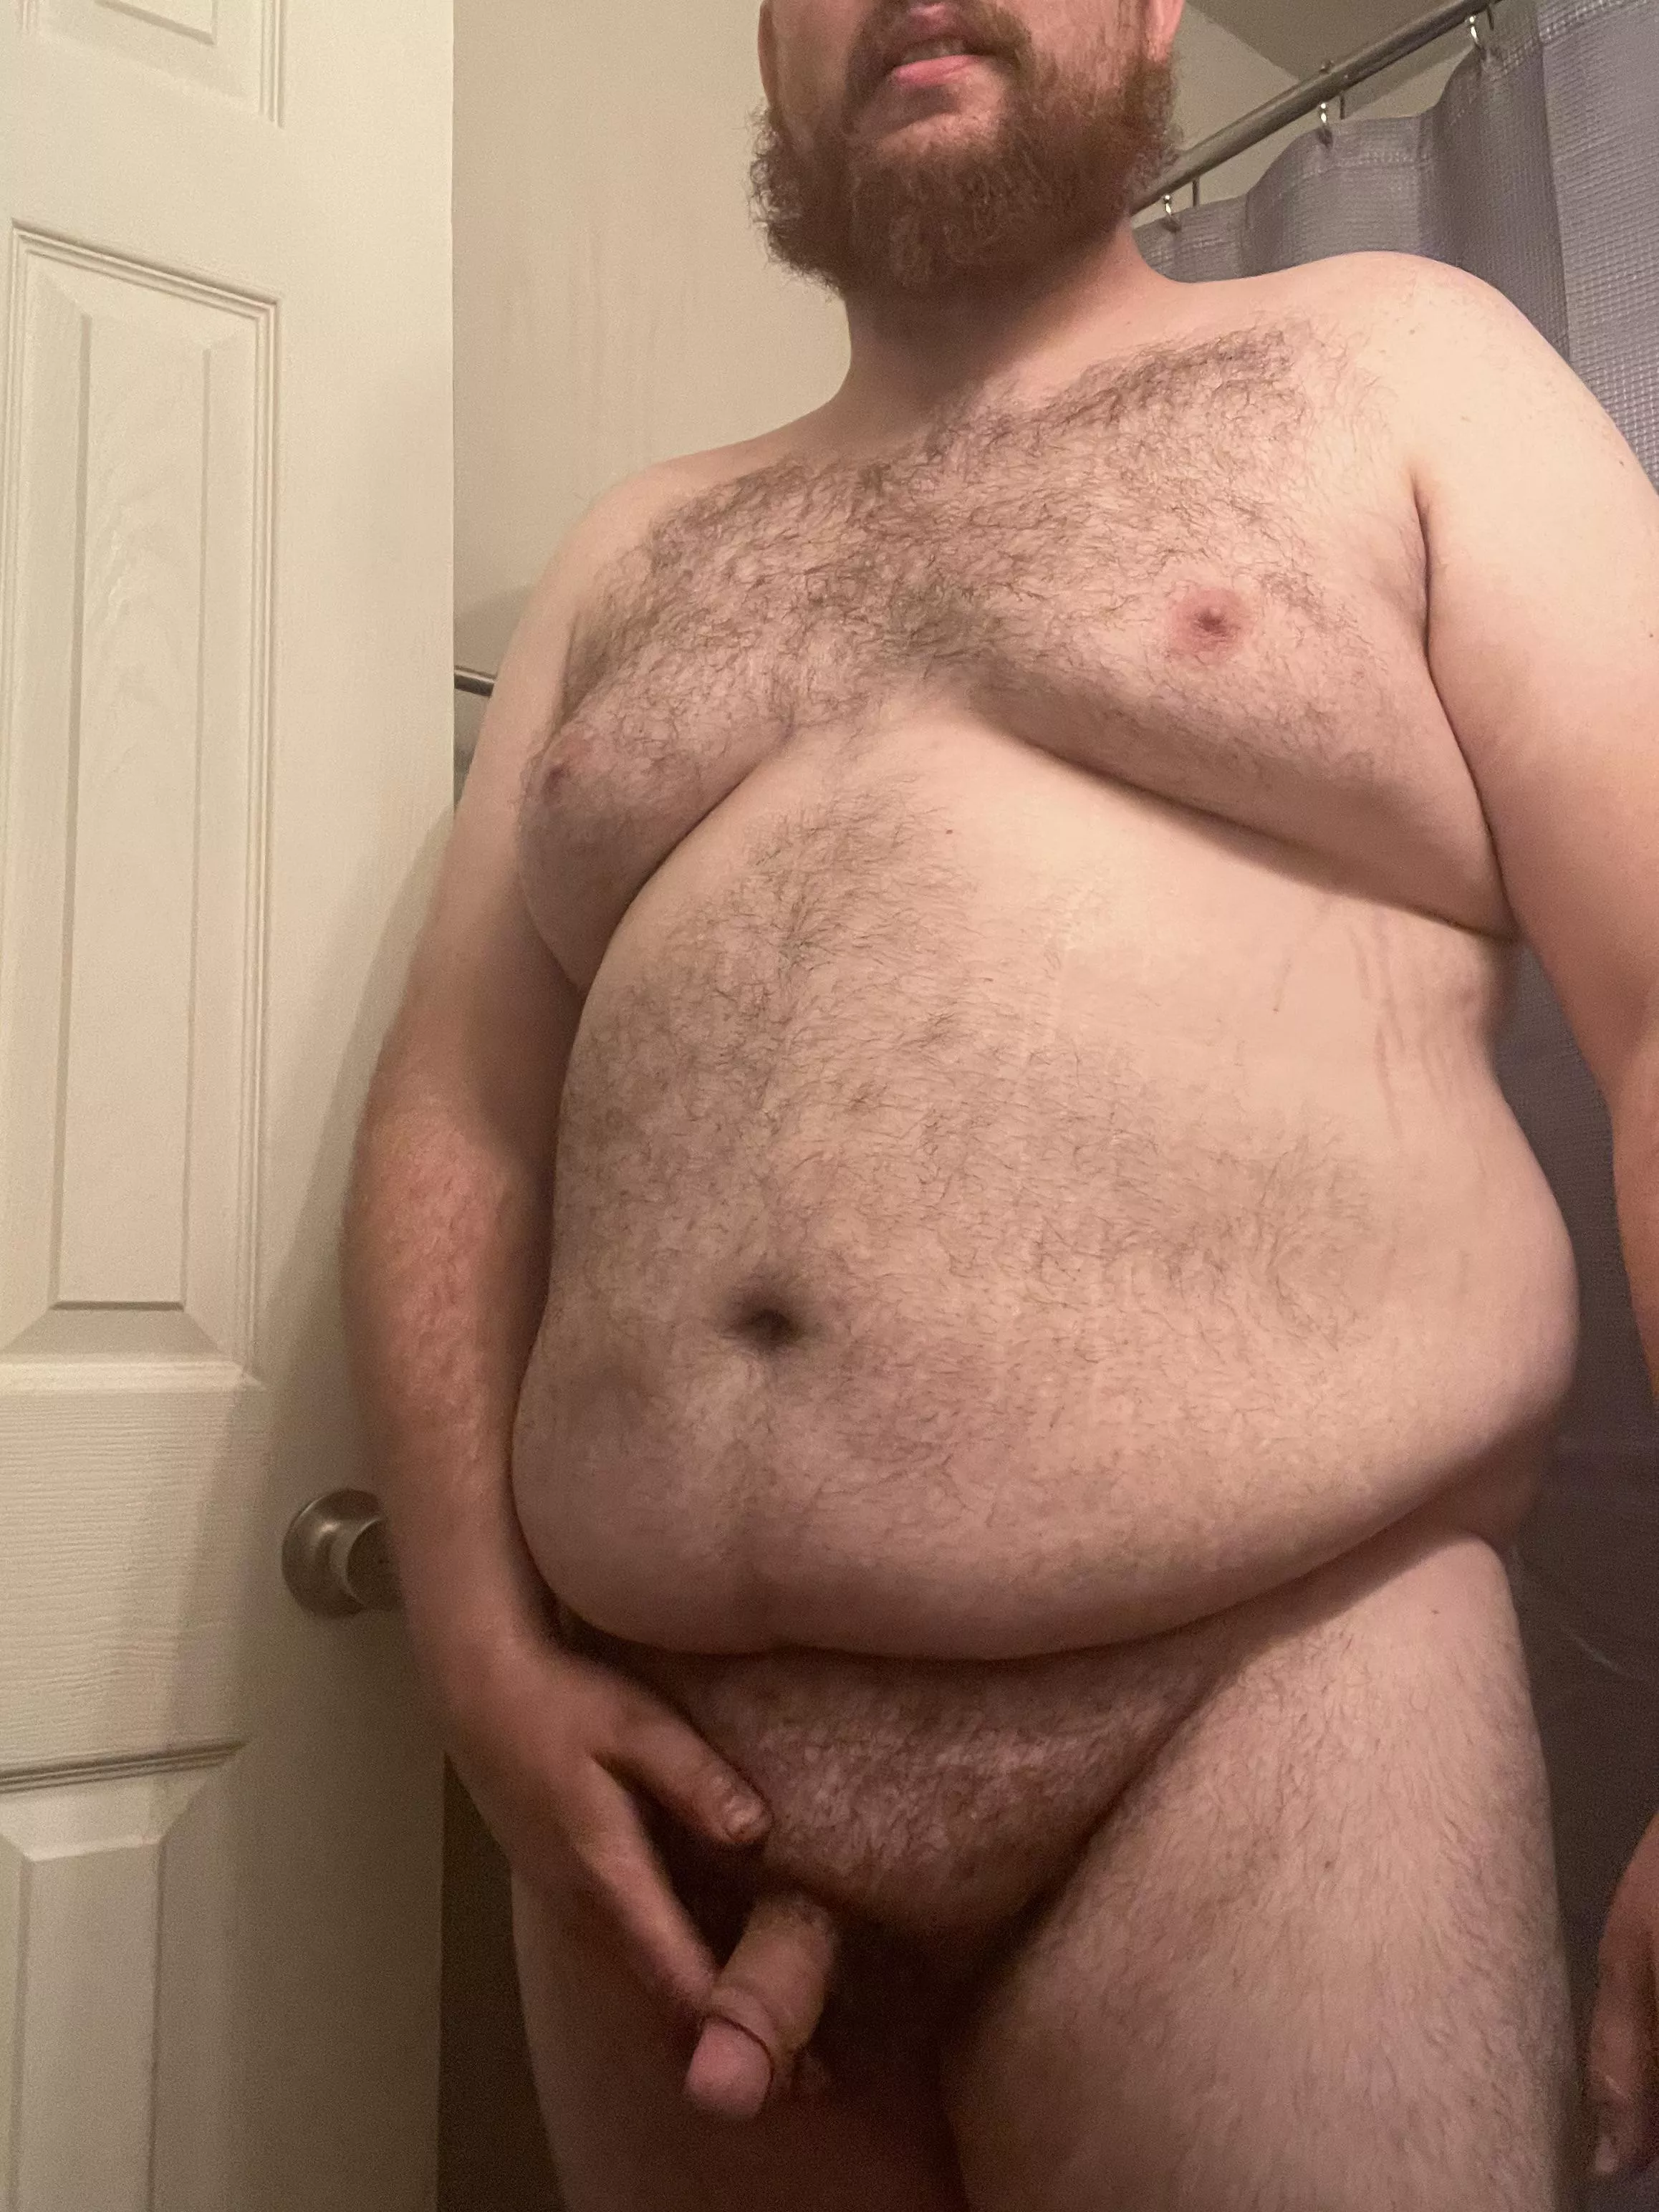 Cub With A Chub Nudes Chubbydudes Nude Pics Org